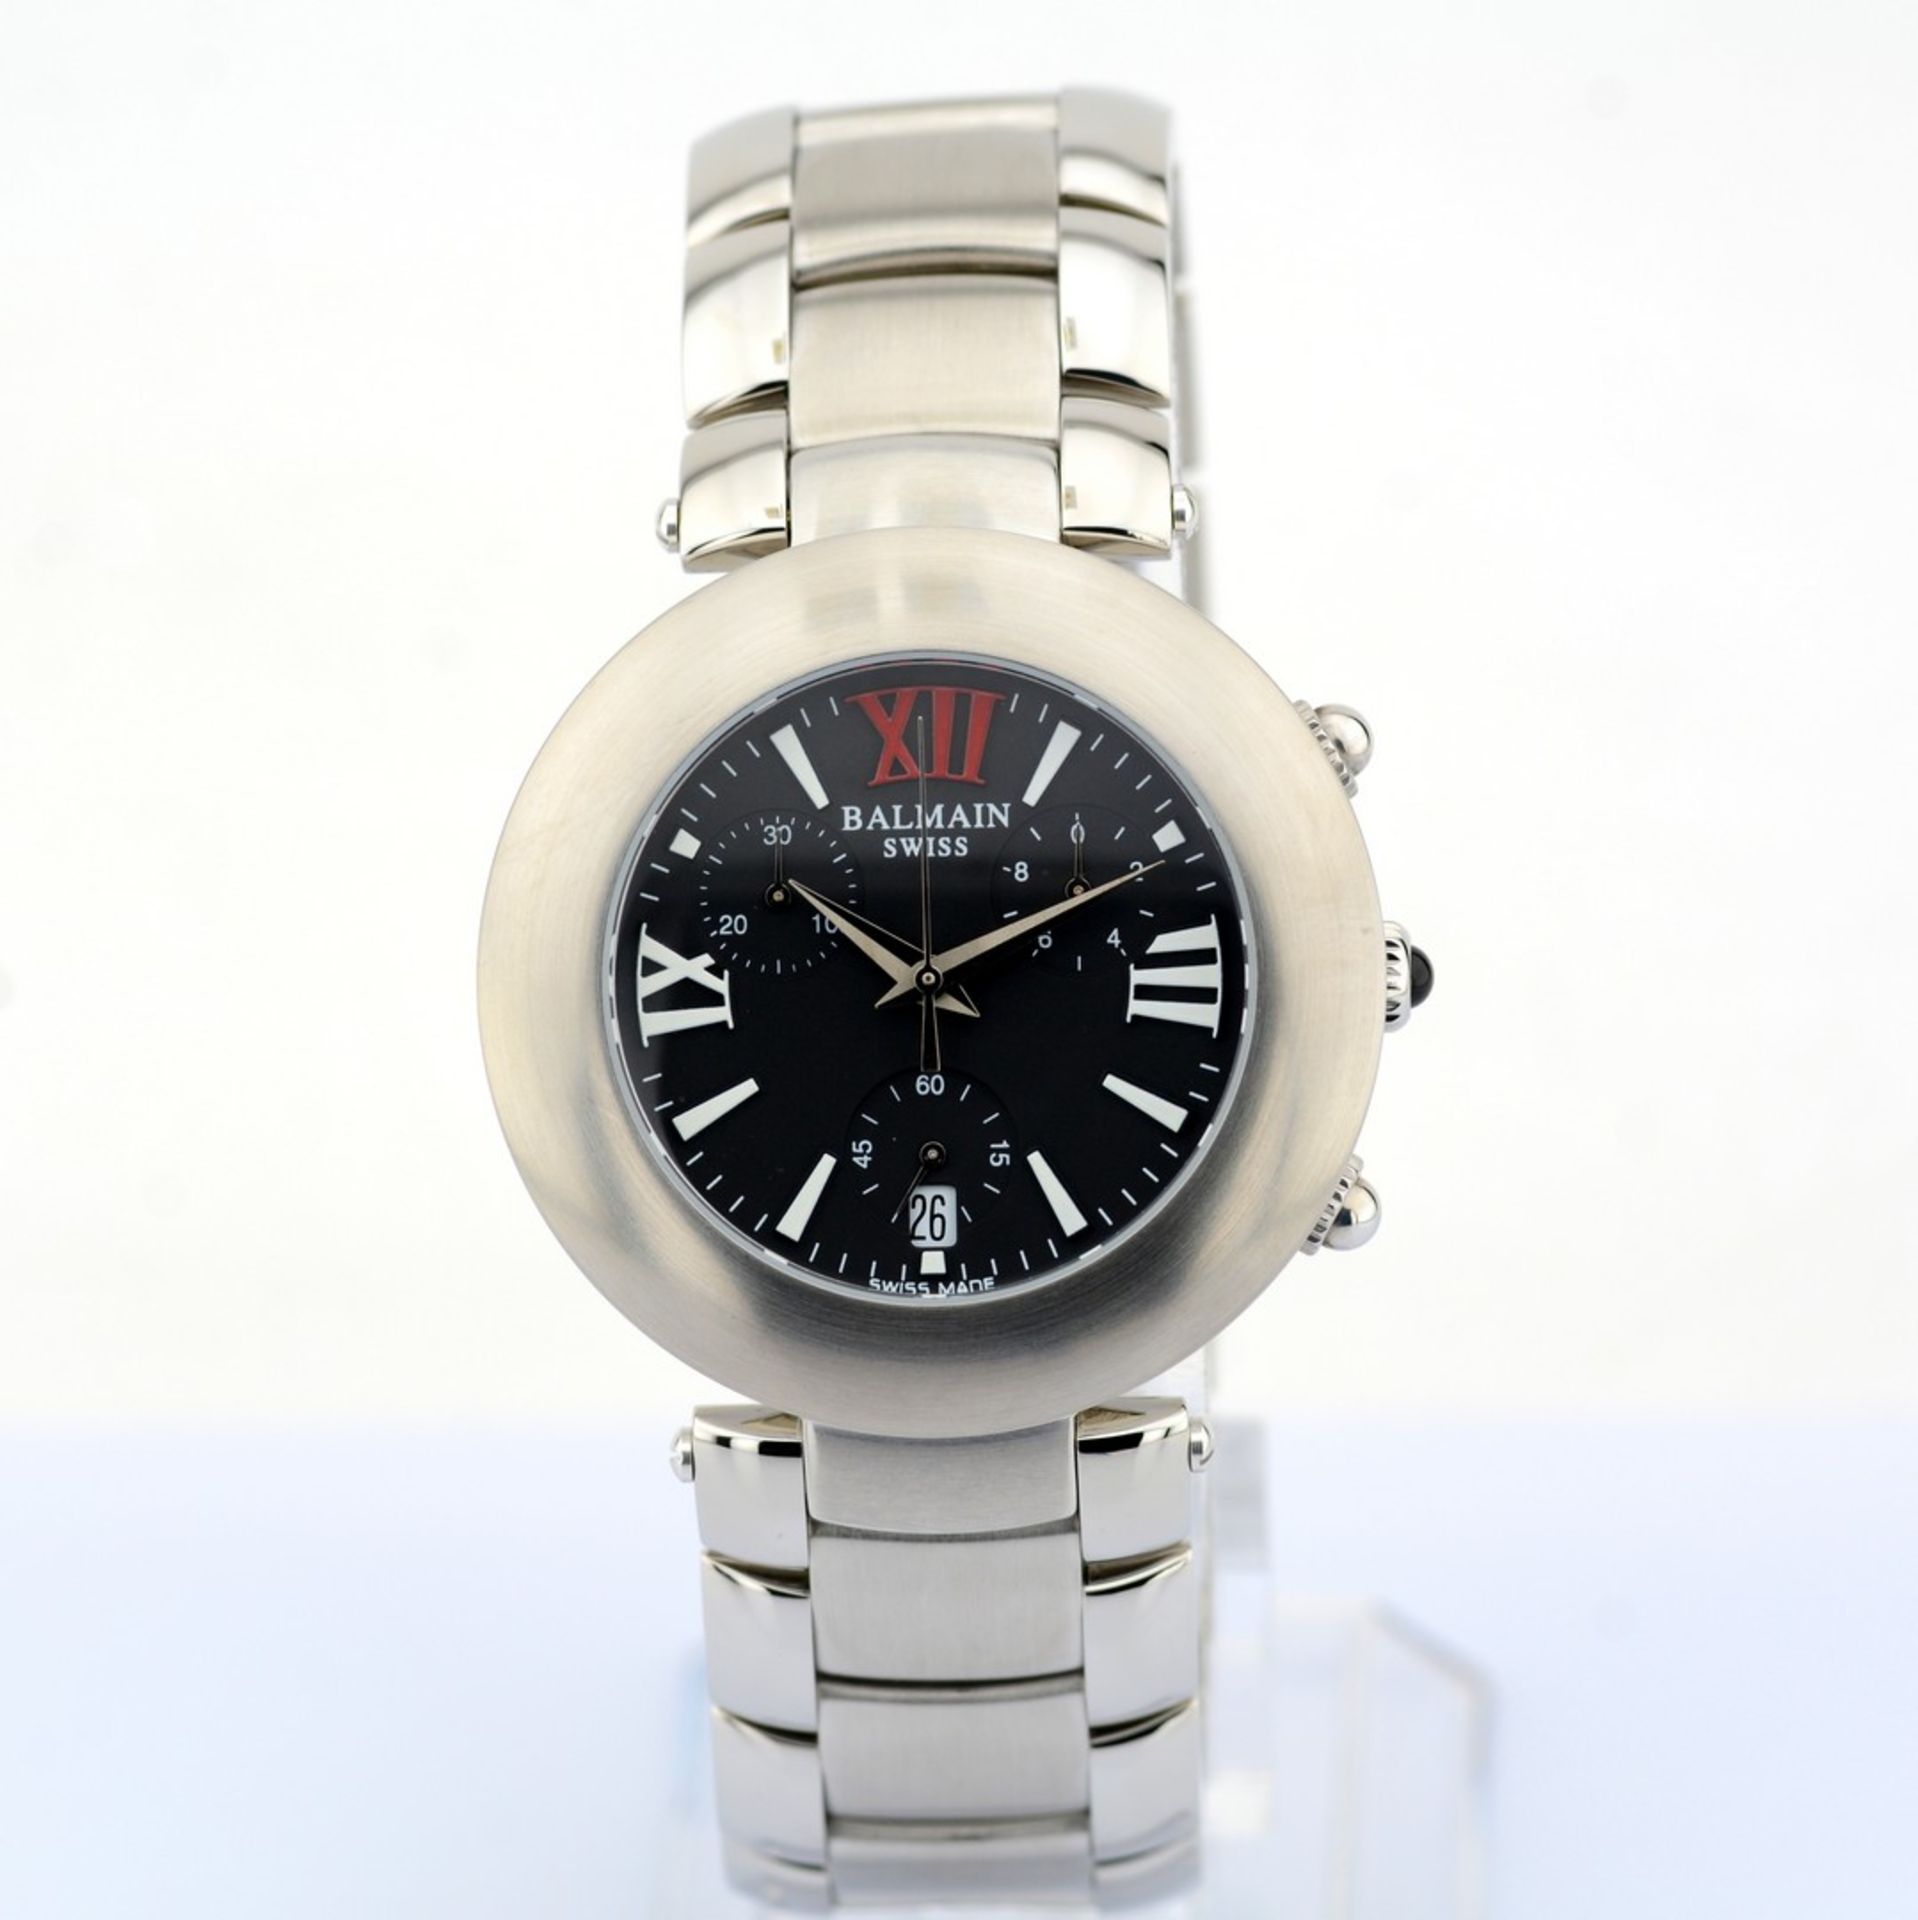 Pierre Balmain / Swiss Chronograph Date - Gentlemen's Steel Wristwatch - Image 3 of 7